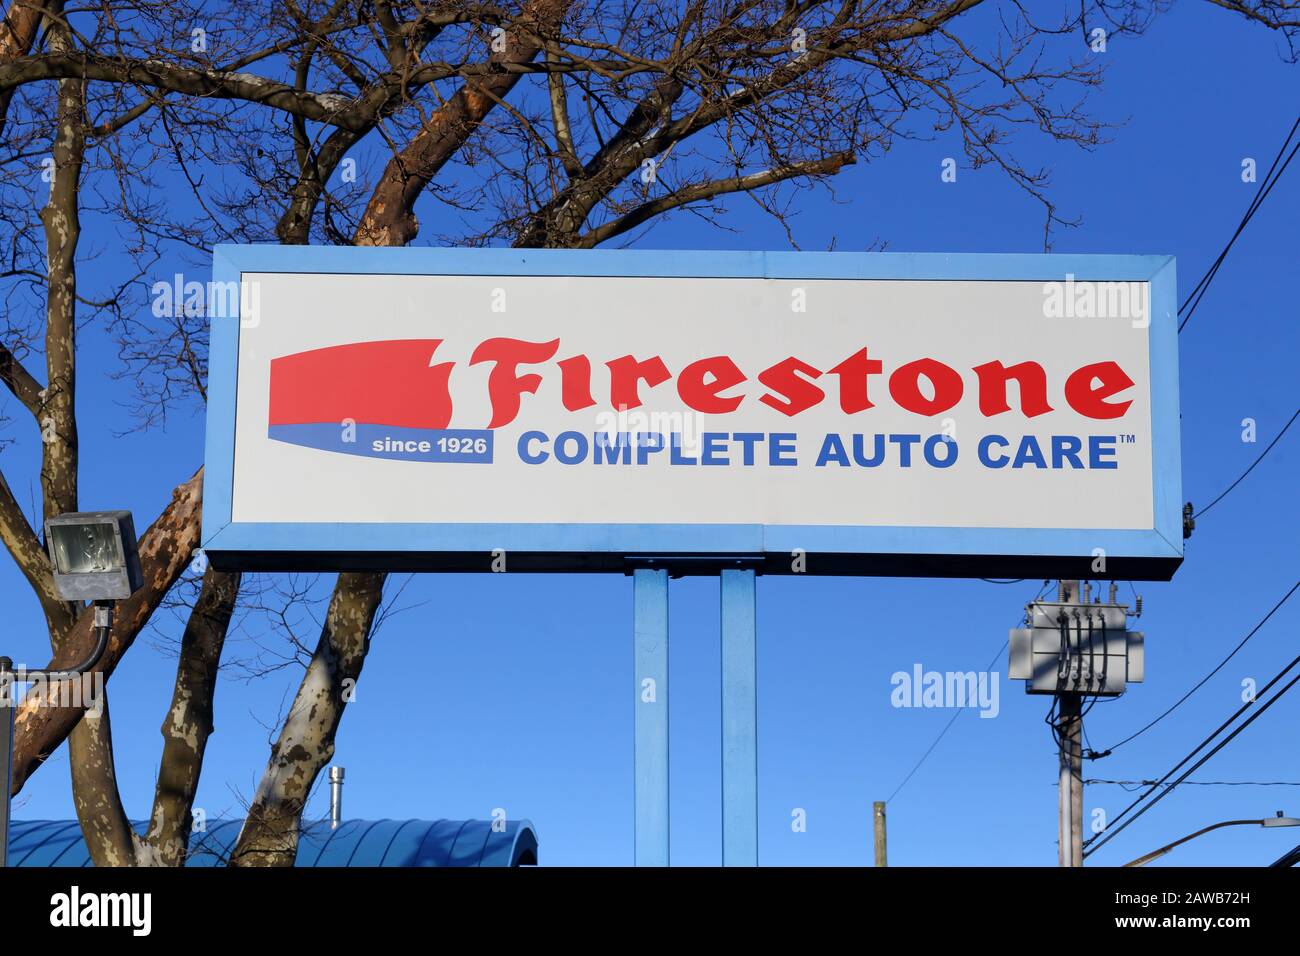 A Firestone Complete Auto Care sign on a pole against a sunny, blue sky Stock Photo